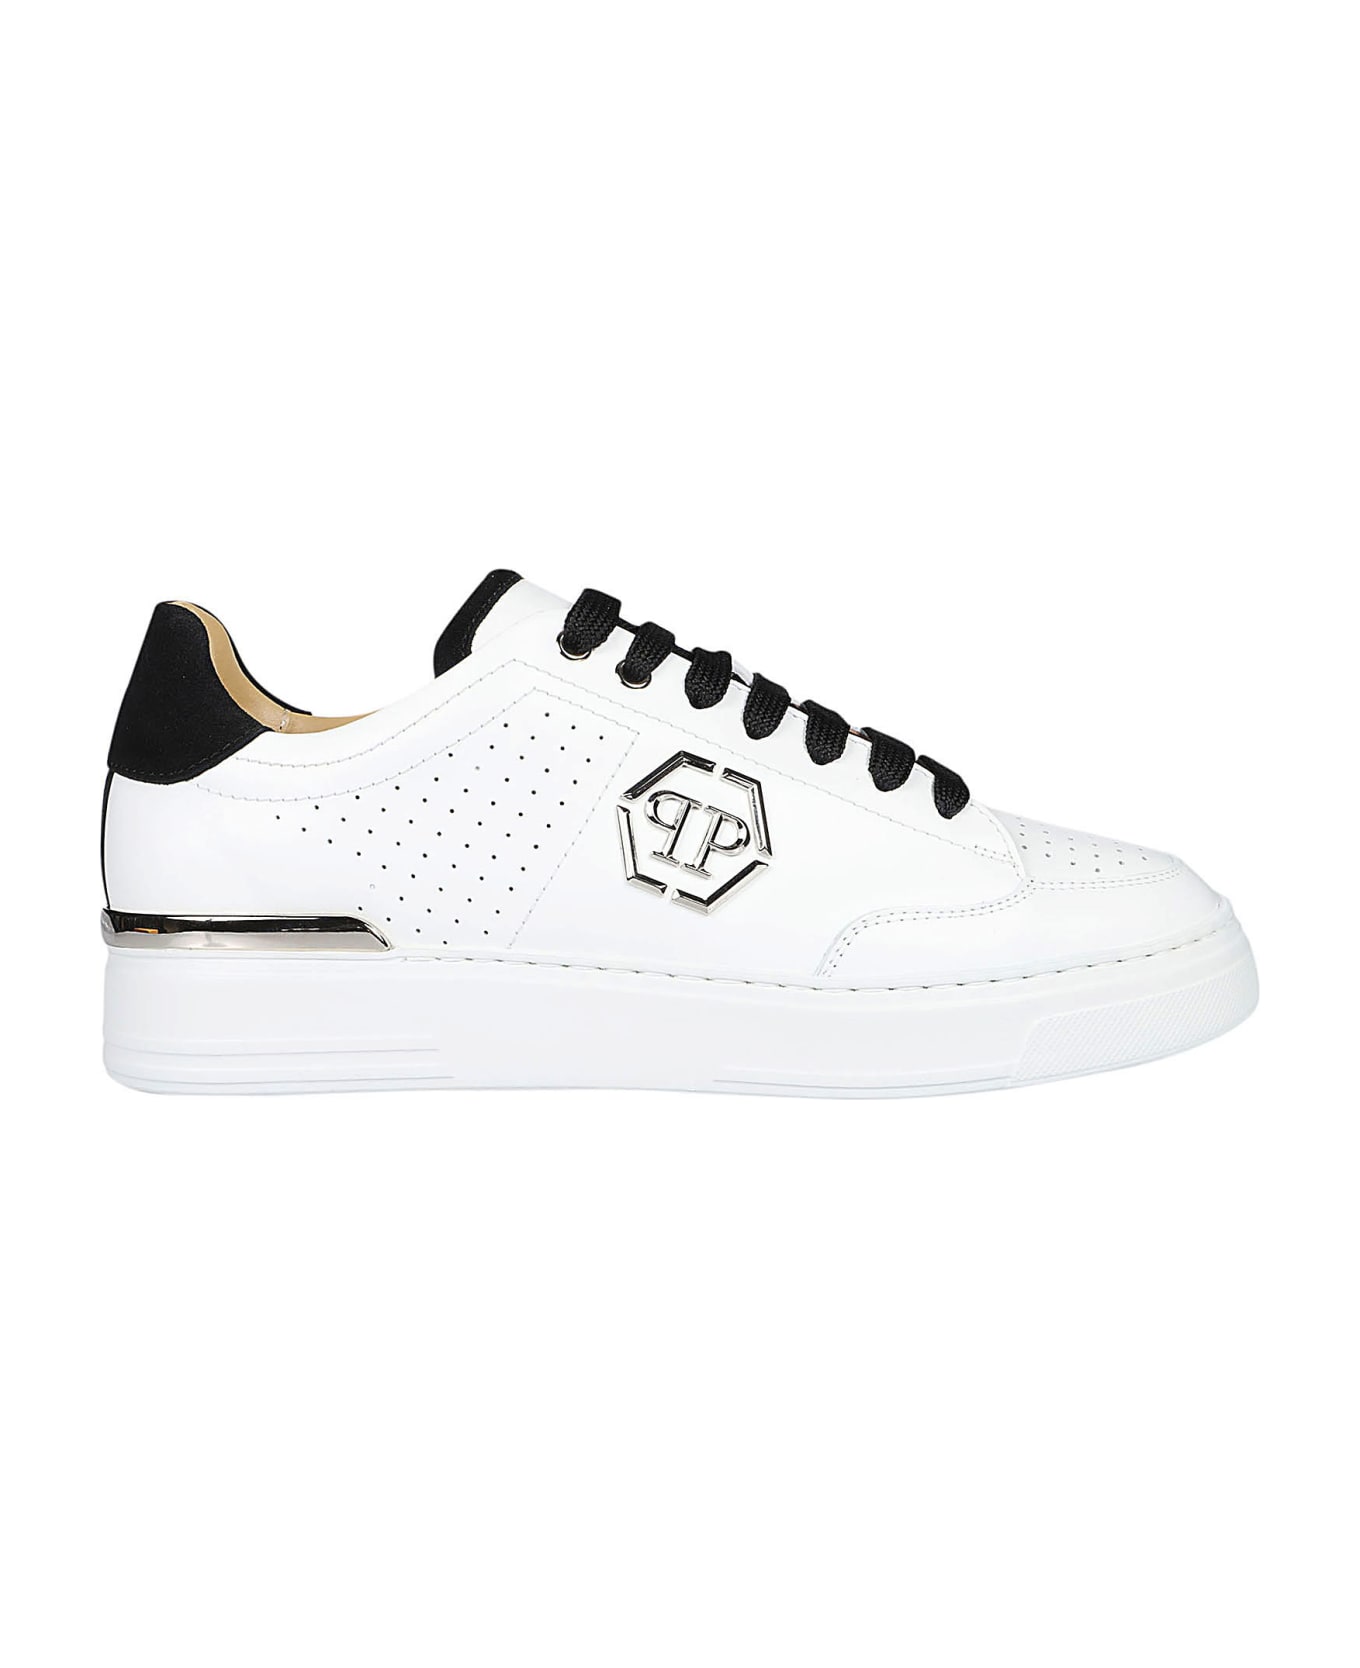 Philipp Plein Low Top Sneakers - White/black